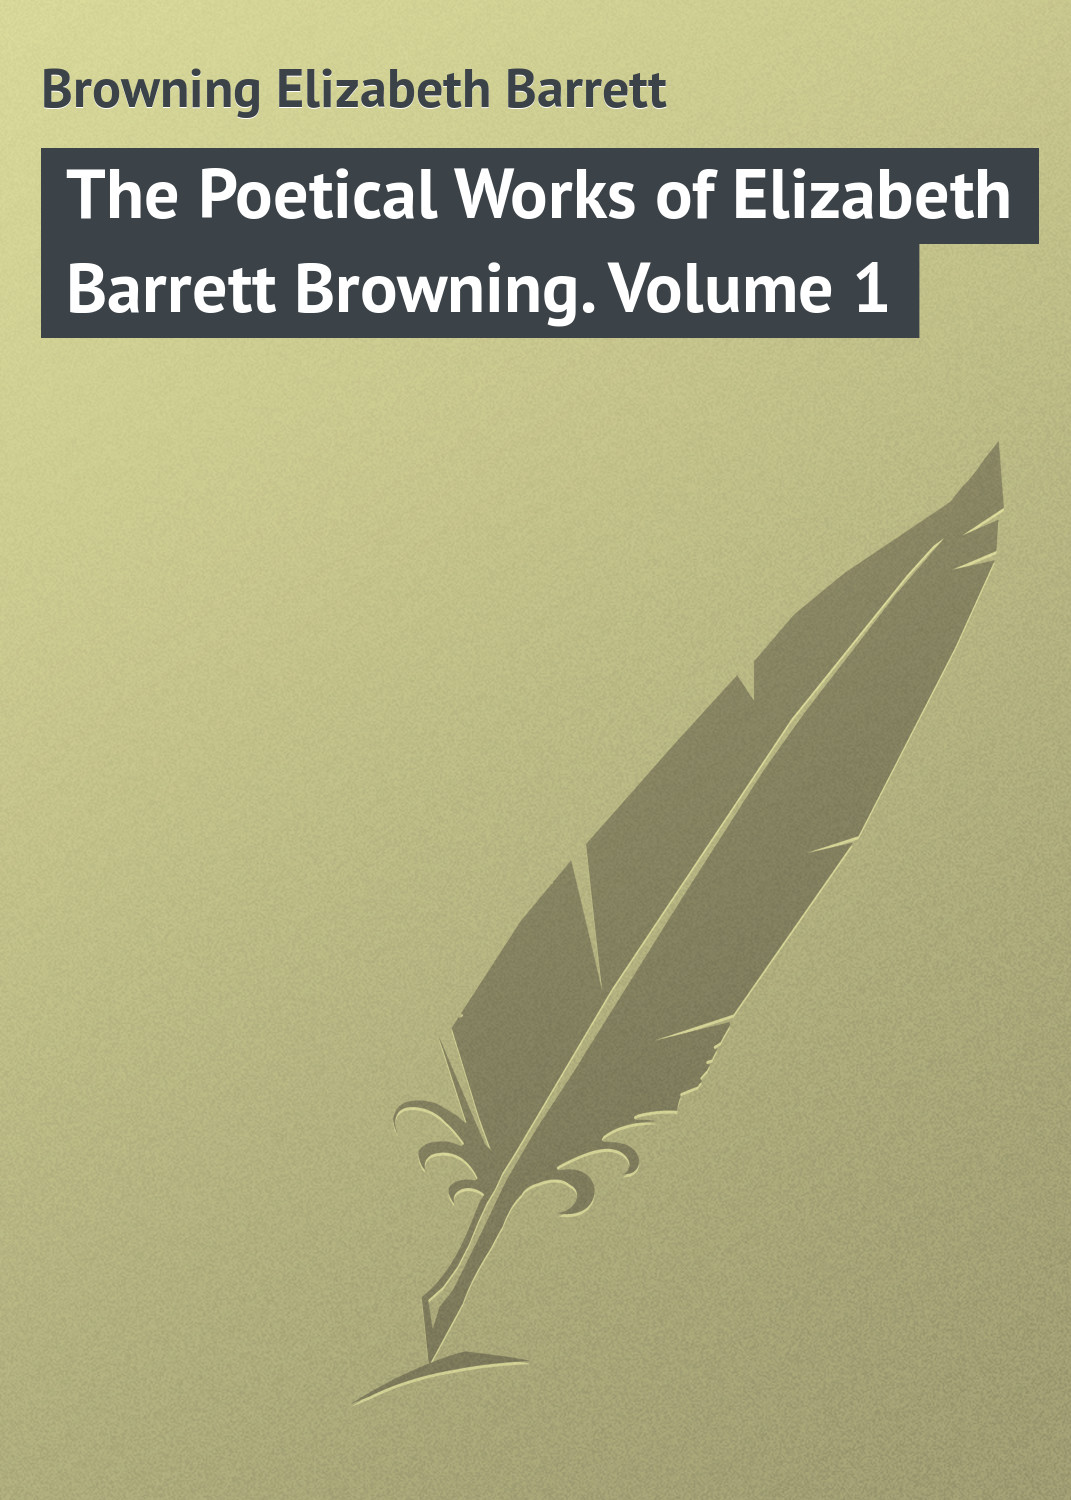 Browning Elizabeth Barrett The Poetical Works of Elizabeth Barrett Browning. Volume 1